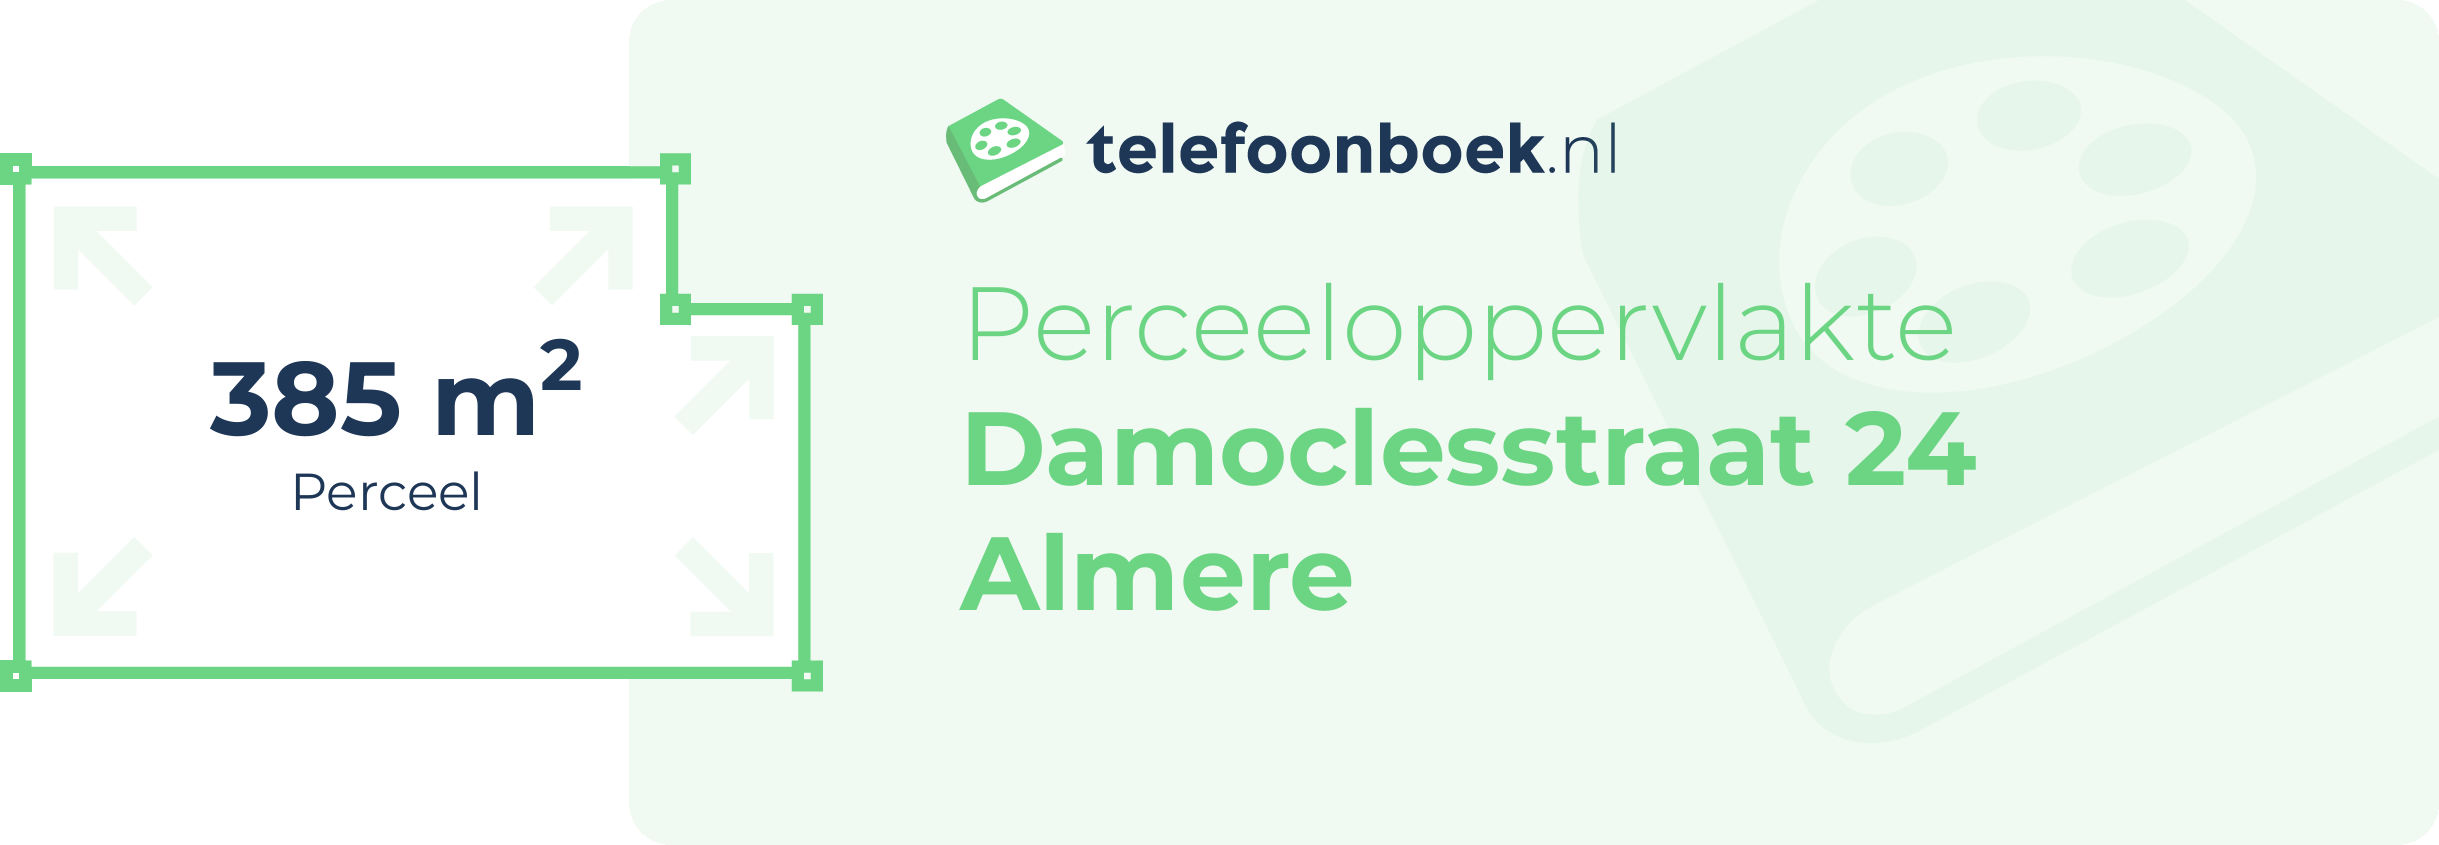 Perceeloppervlakte Damoclesstraat 24 Almere